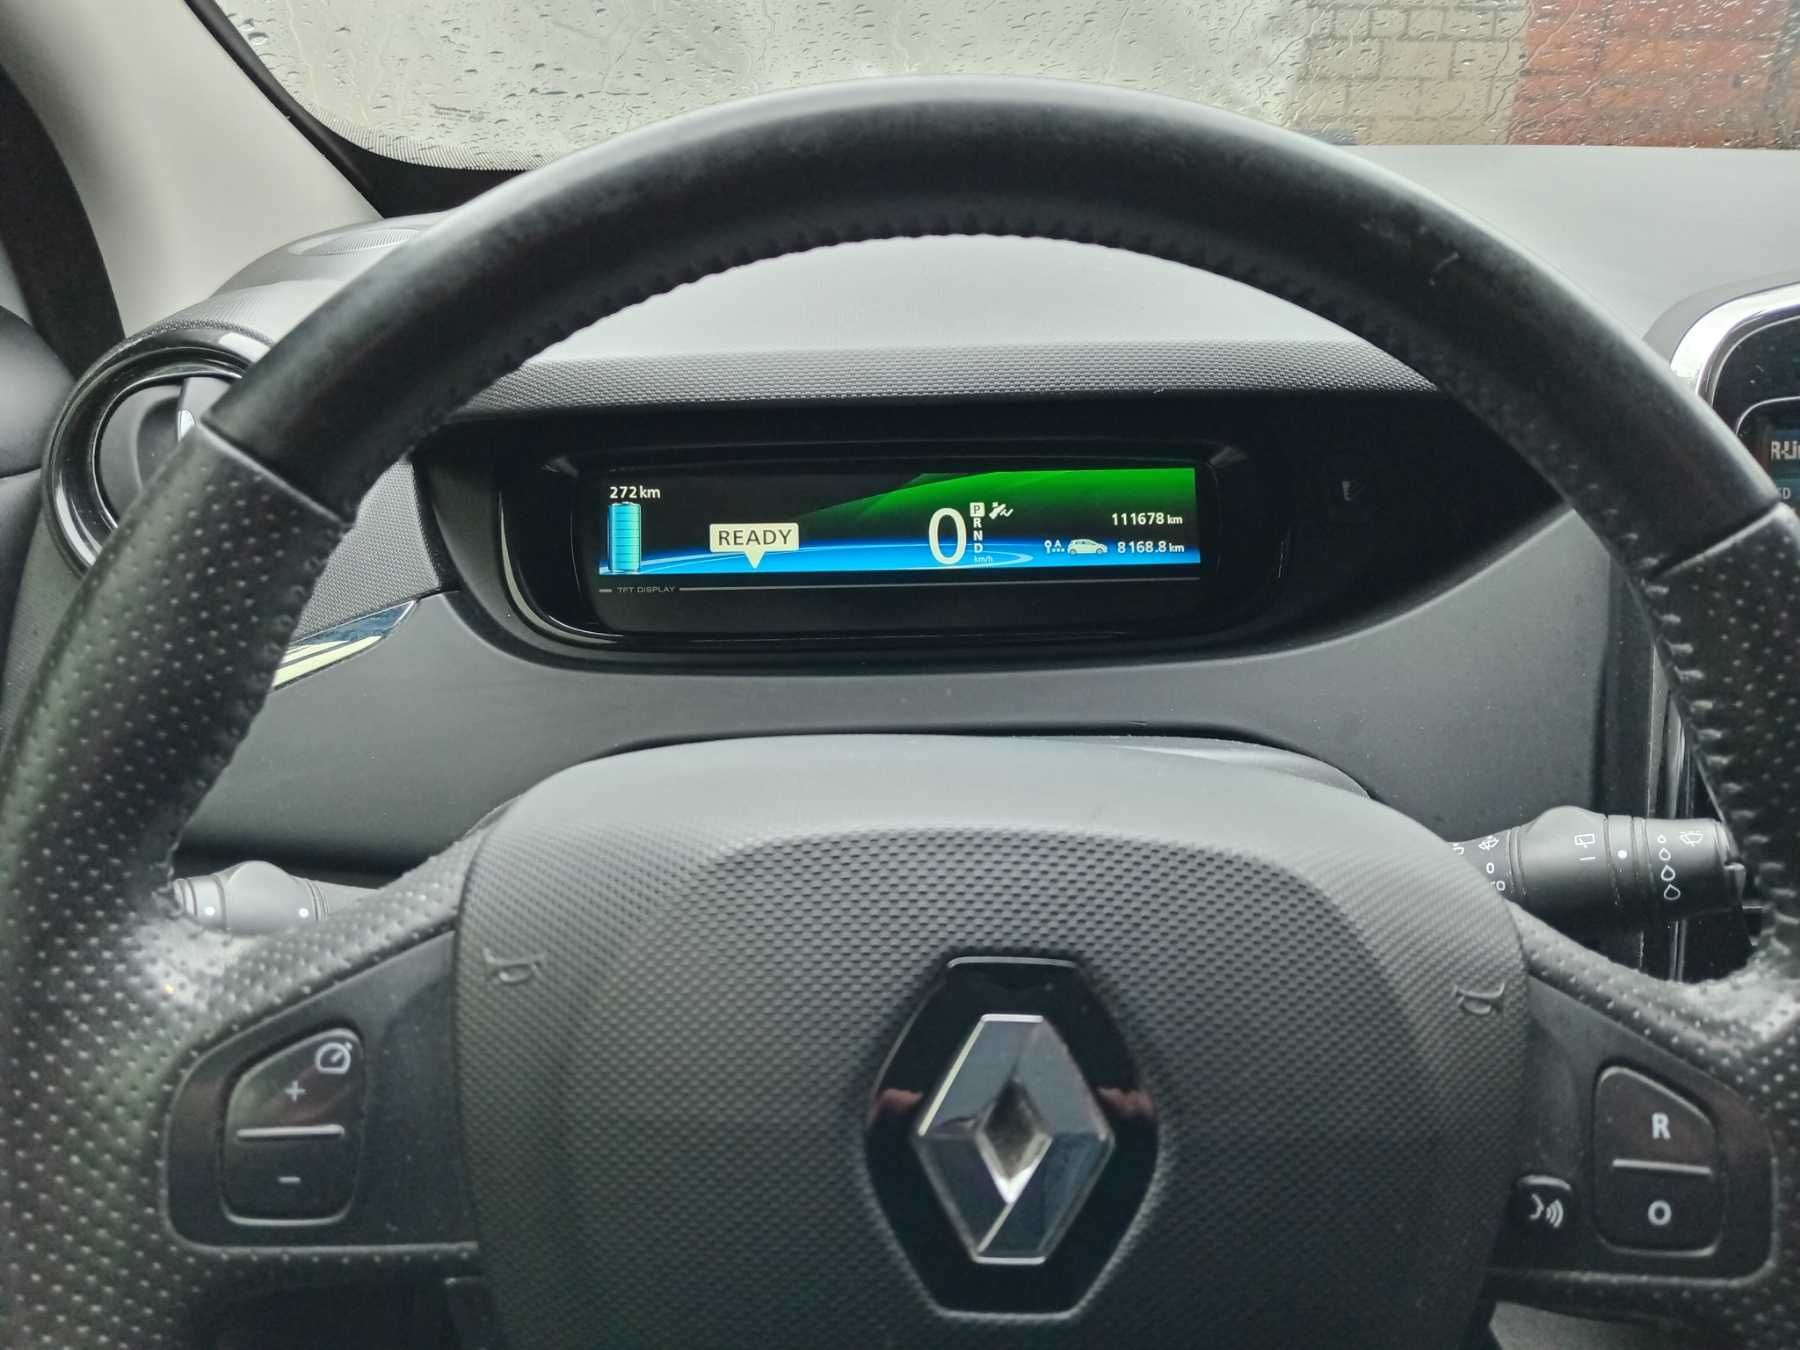 Продам електромобіль Renault Zoe 2017 (40 kWh) Запас ходу 300 км.